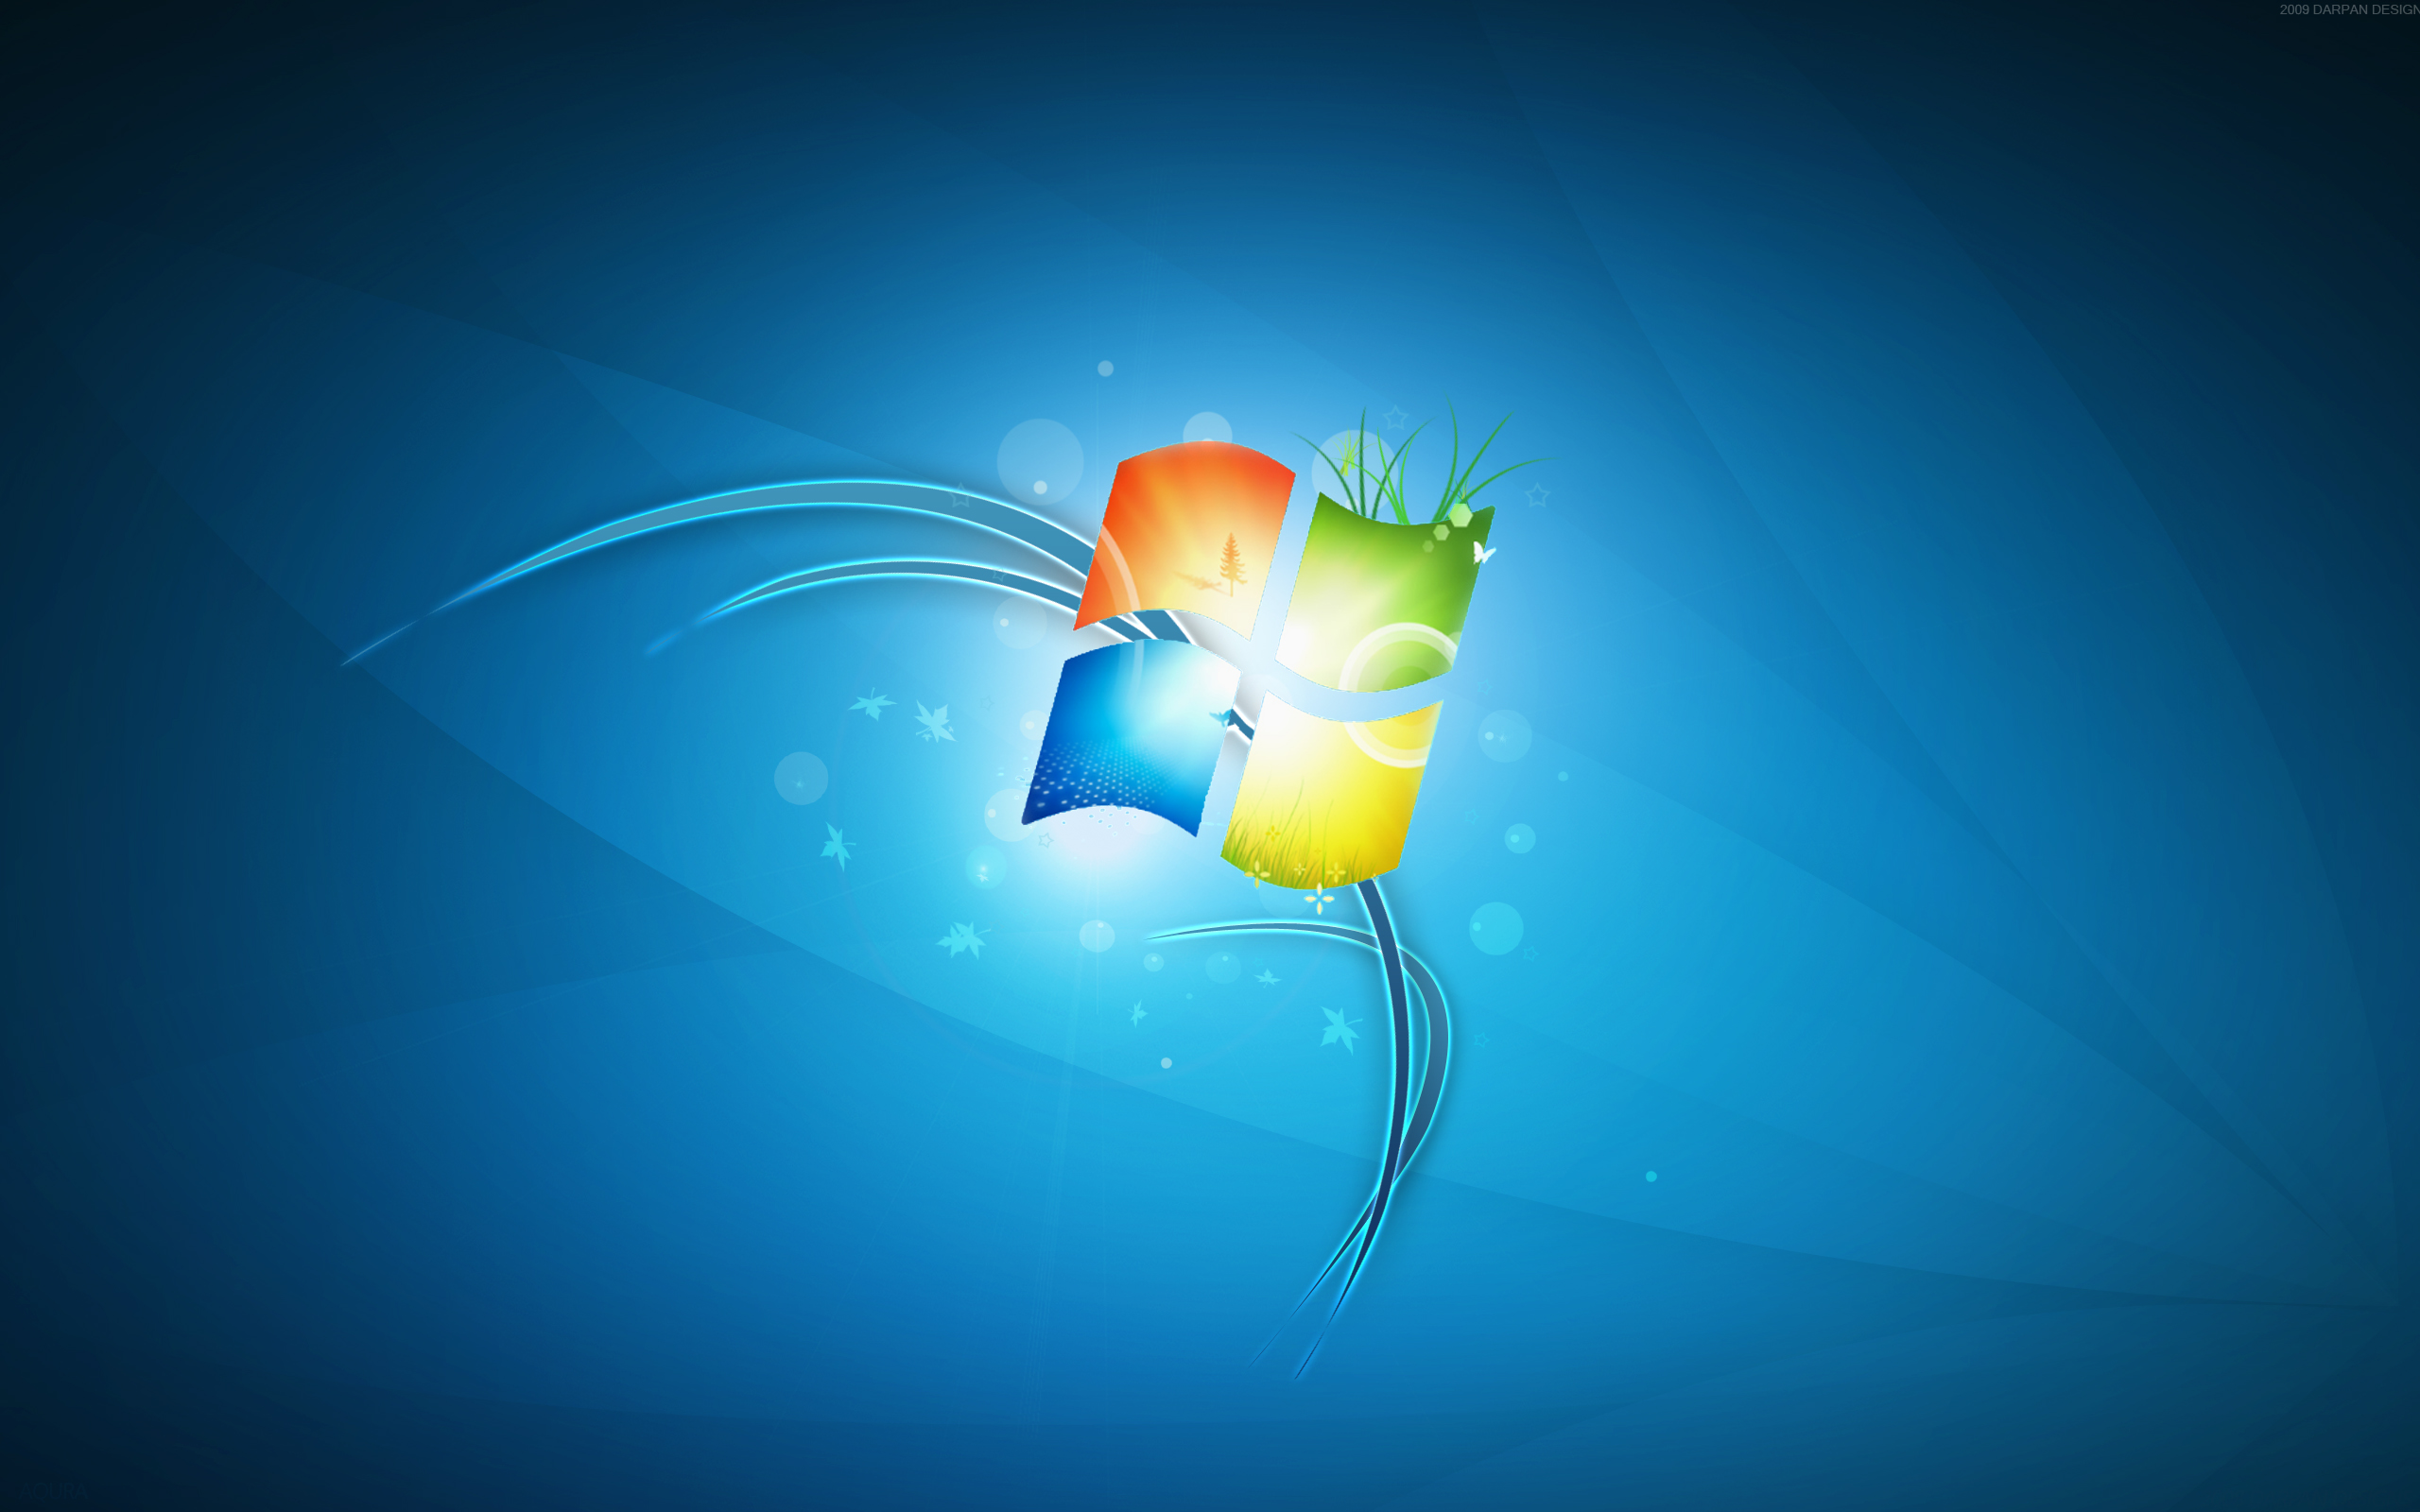 Windows 7 ultimate wallpaper free download